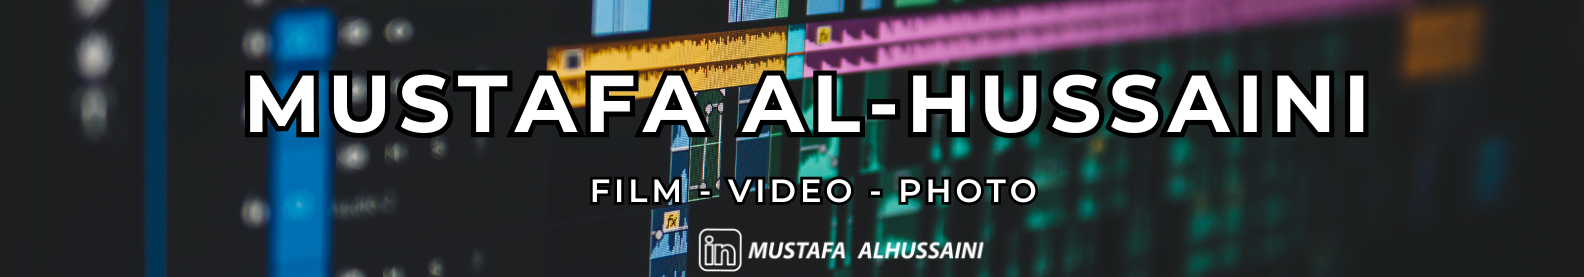 Mustafa Alhussaini's profile banner